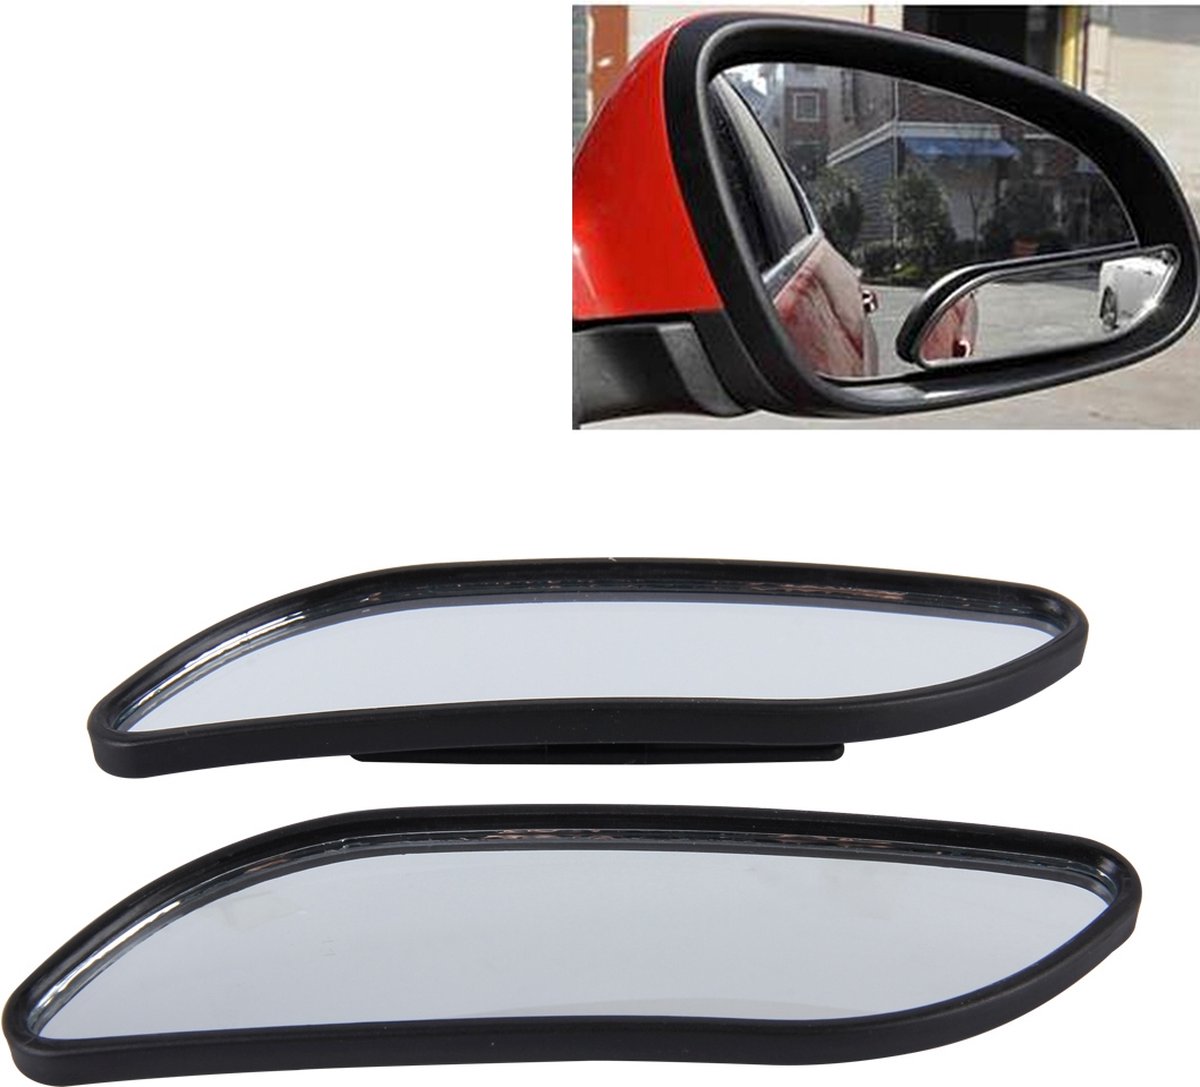 3R-067 2 STKS Auto Blinde hoek en brede achteraanzicht Groothoek verstelbare spiegel (zwart)